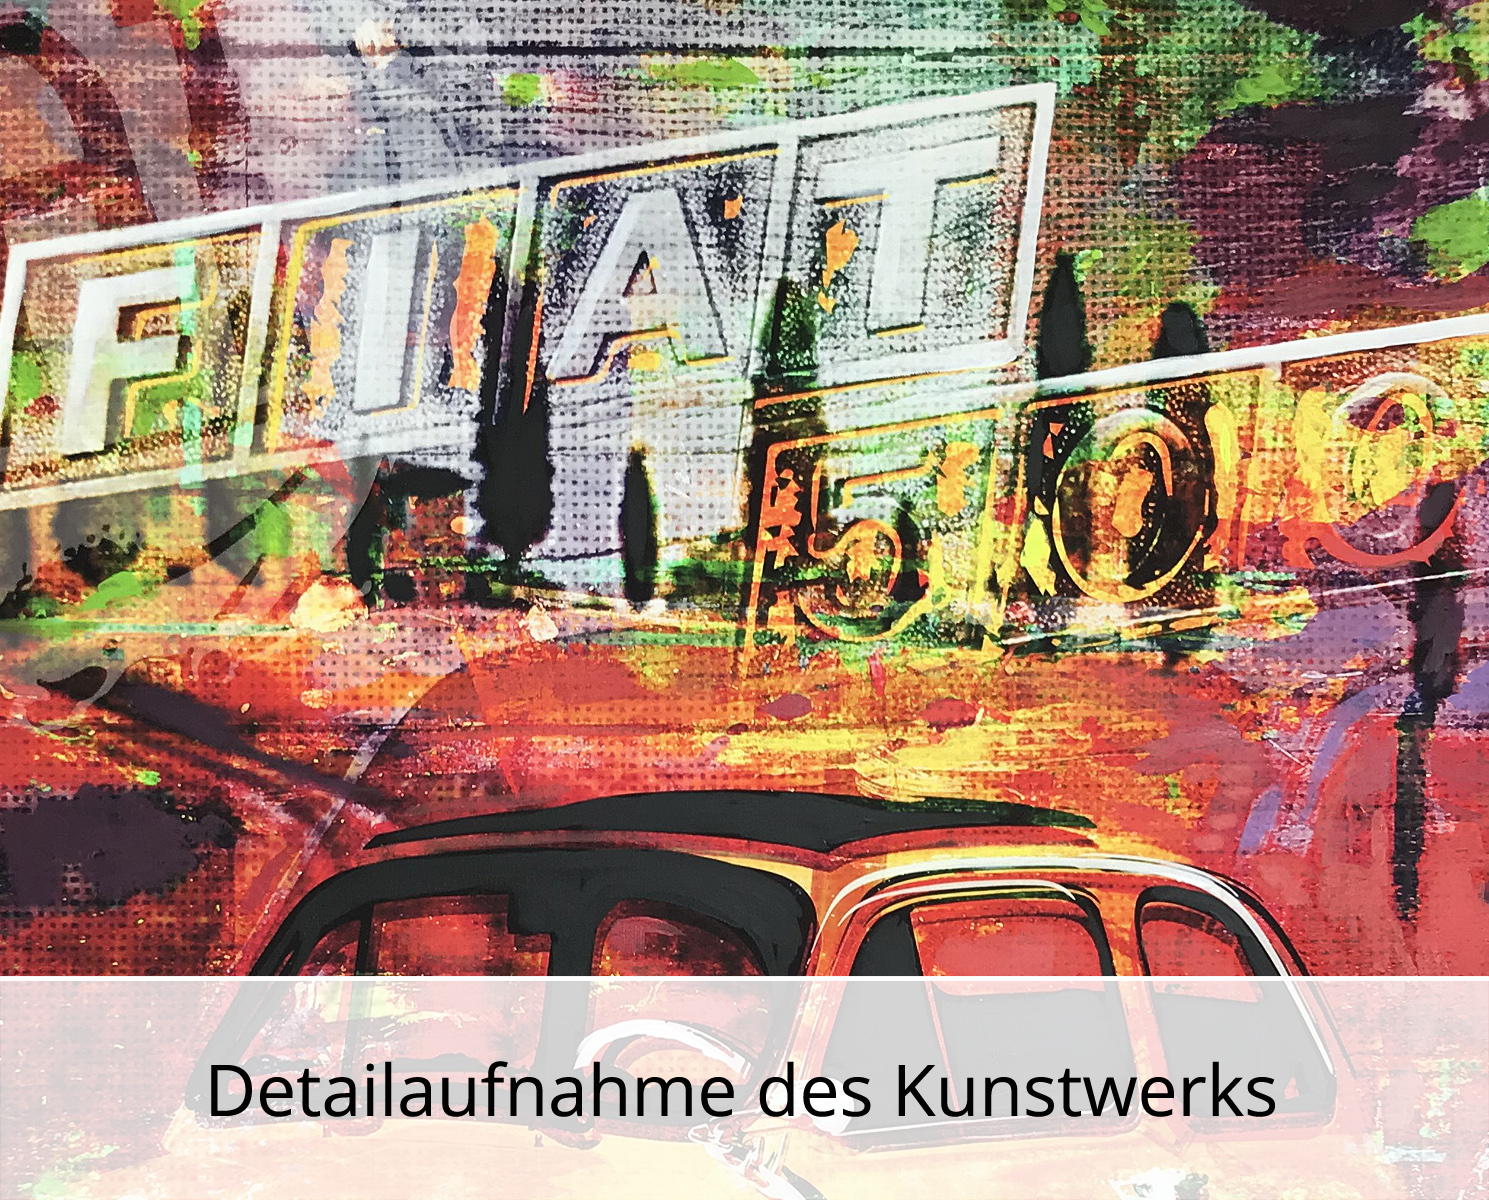 H. Mühlbauer-Gardemin: "Fiat 500", Moderne Pop Art, Original/serielles Unikat